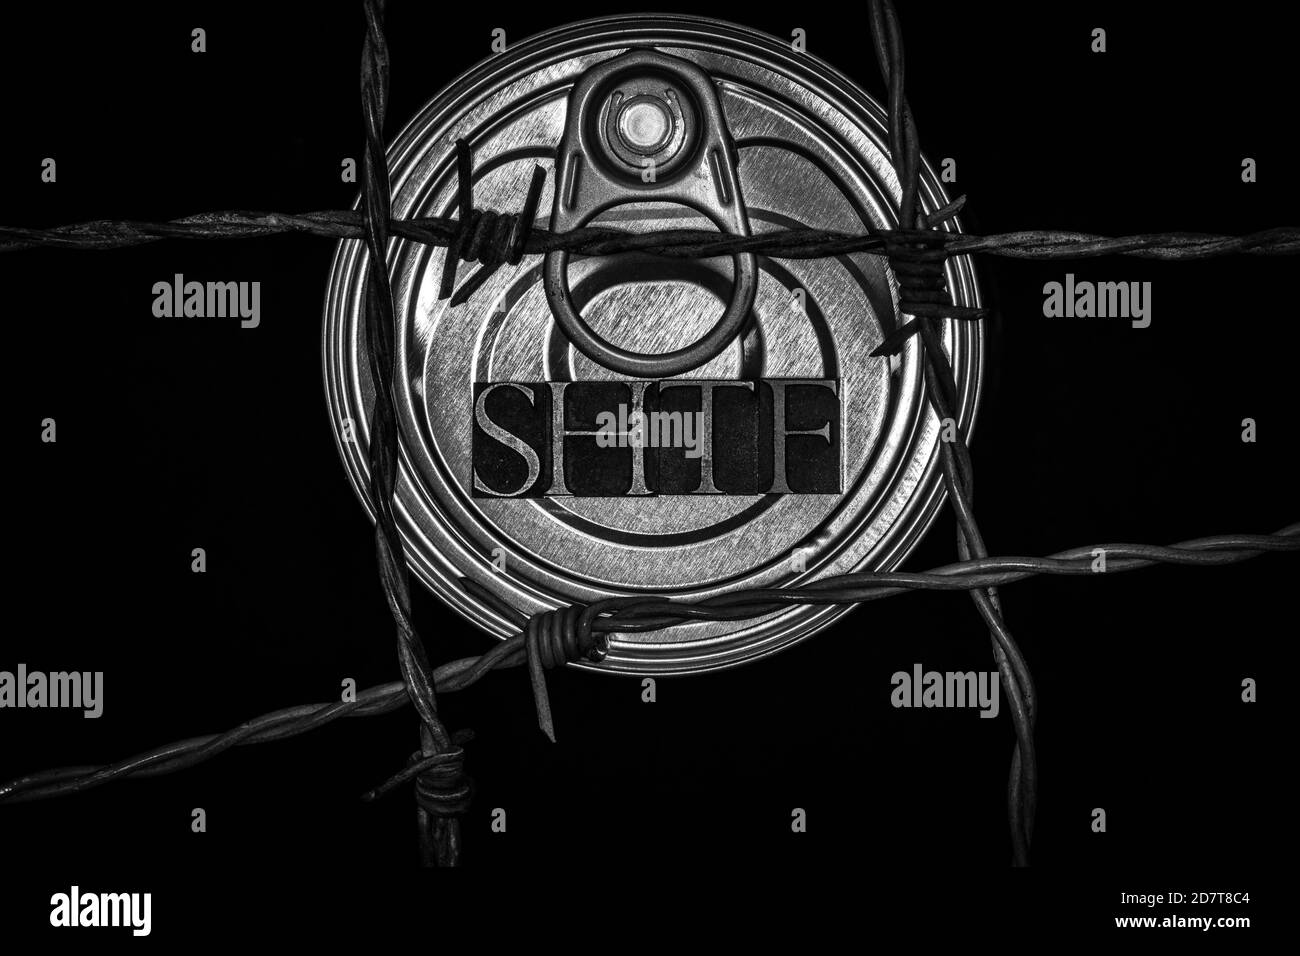 Shtf Black and White Stock Photos & Images - Alamy